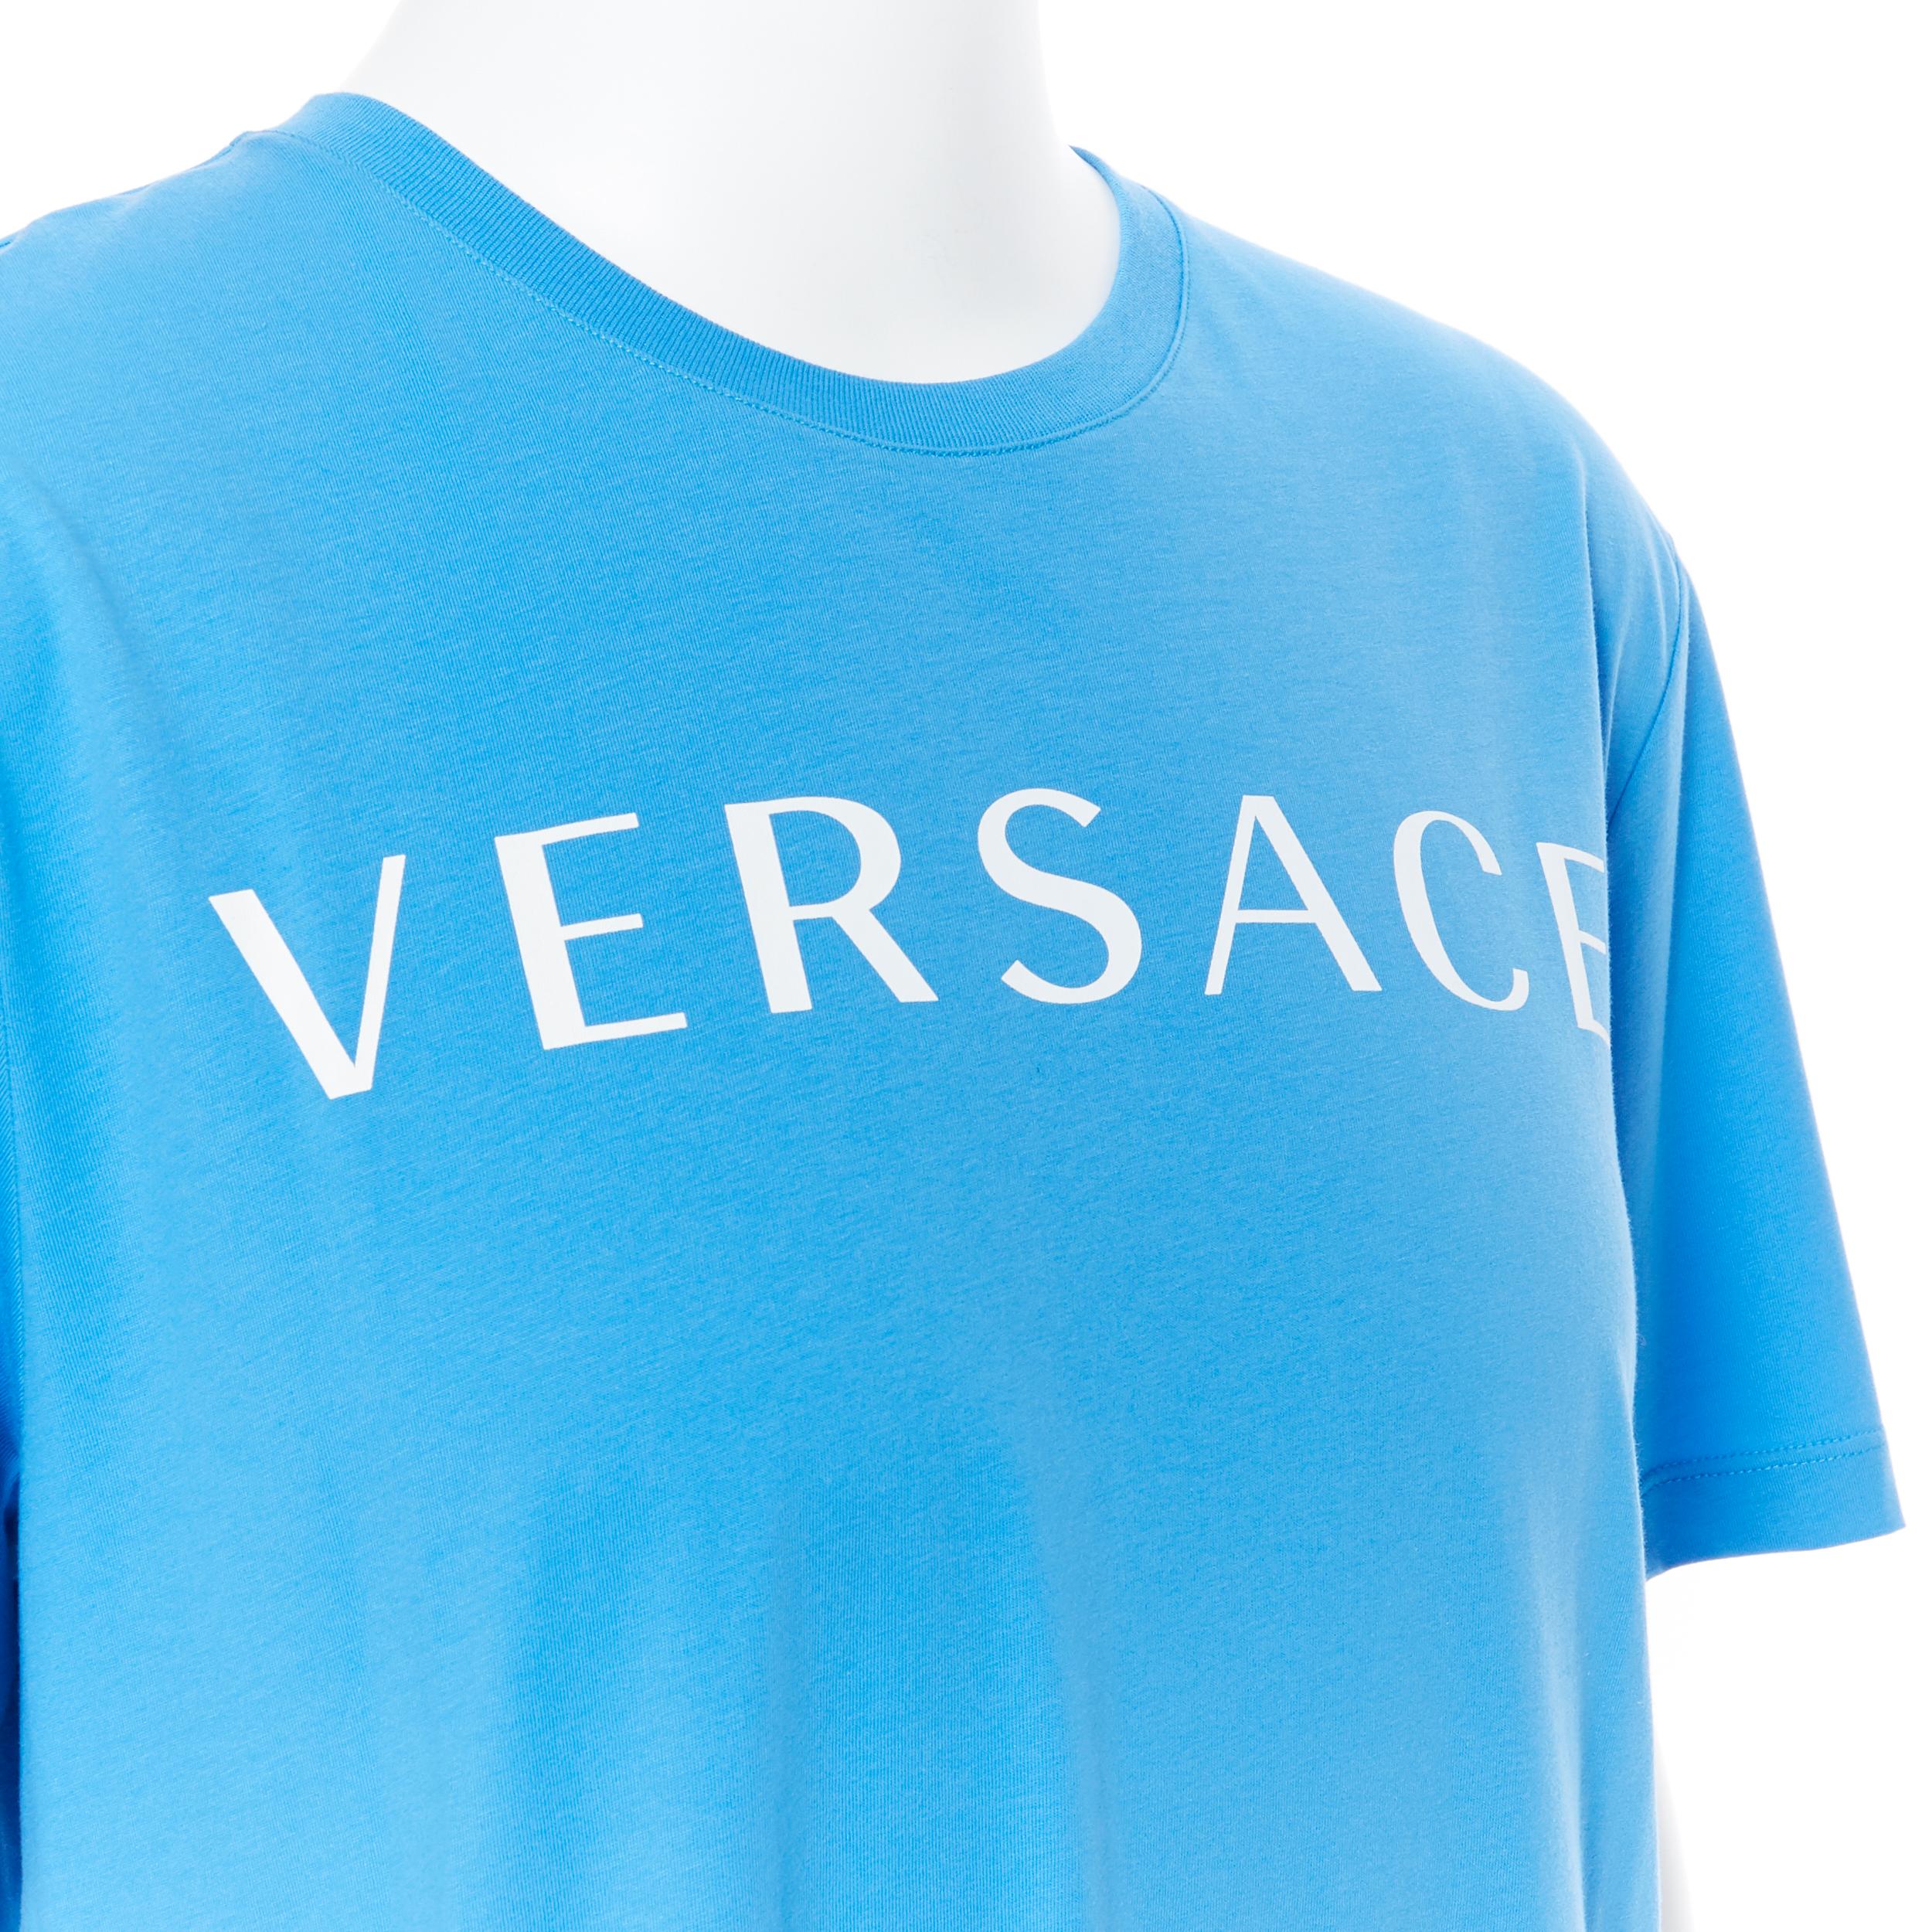 new VERSACE 2018 blue vintage 90's logo front Medusa print slogan t-shirt 3XL
Brand: Versace
Designer: Donatella Versace
Collection: 2018
Model Name / Style: Logo t-shirt
Material: Cotton
Color: Blue
Pattern: Other; logomania
Extra Detail: 100%